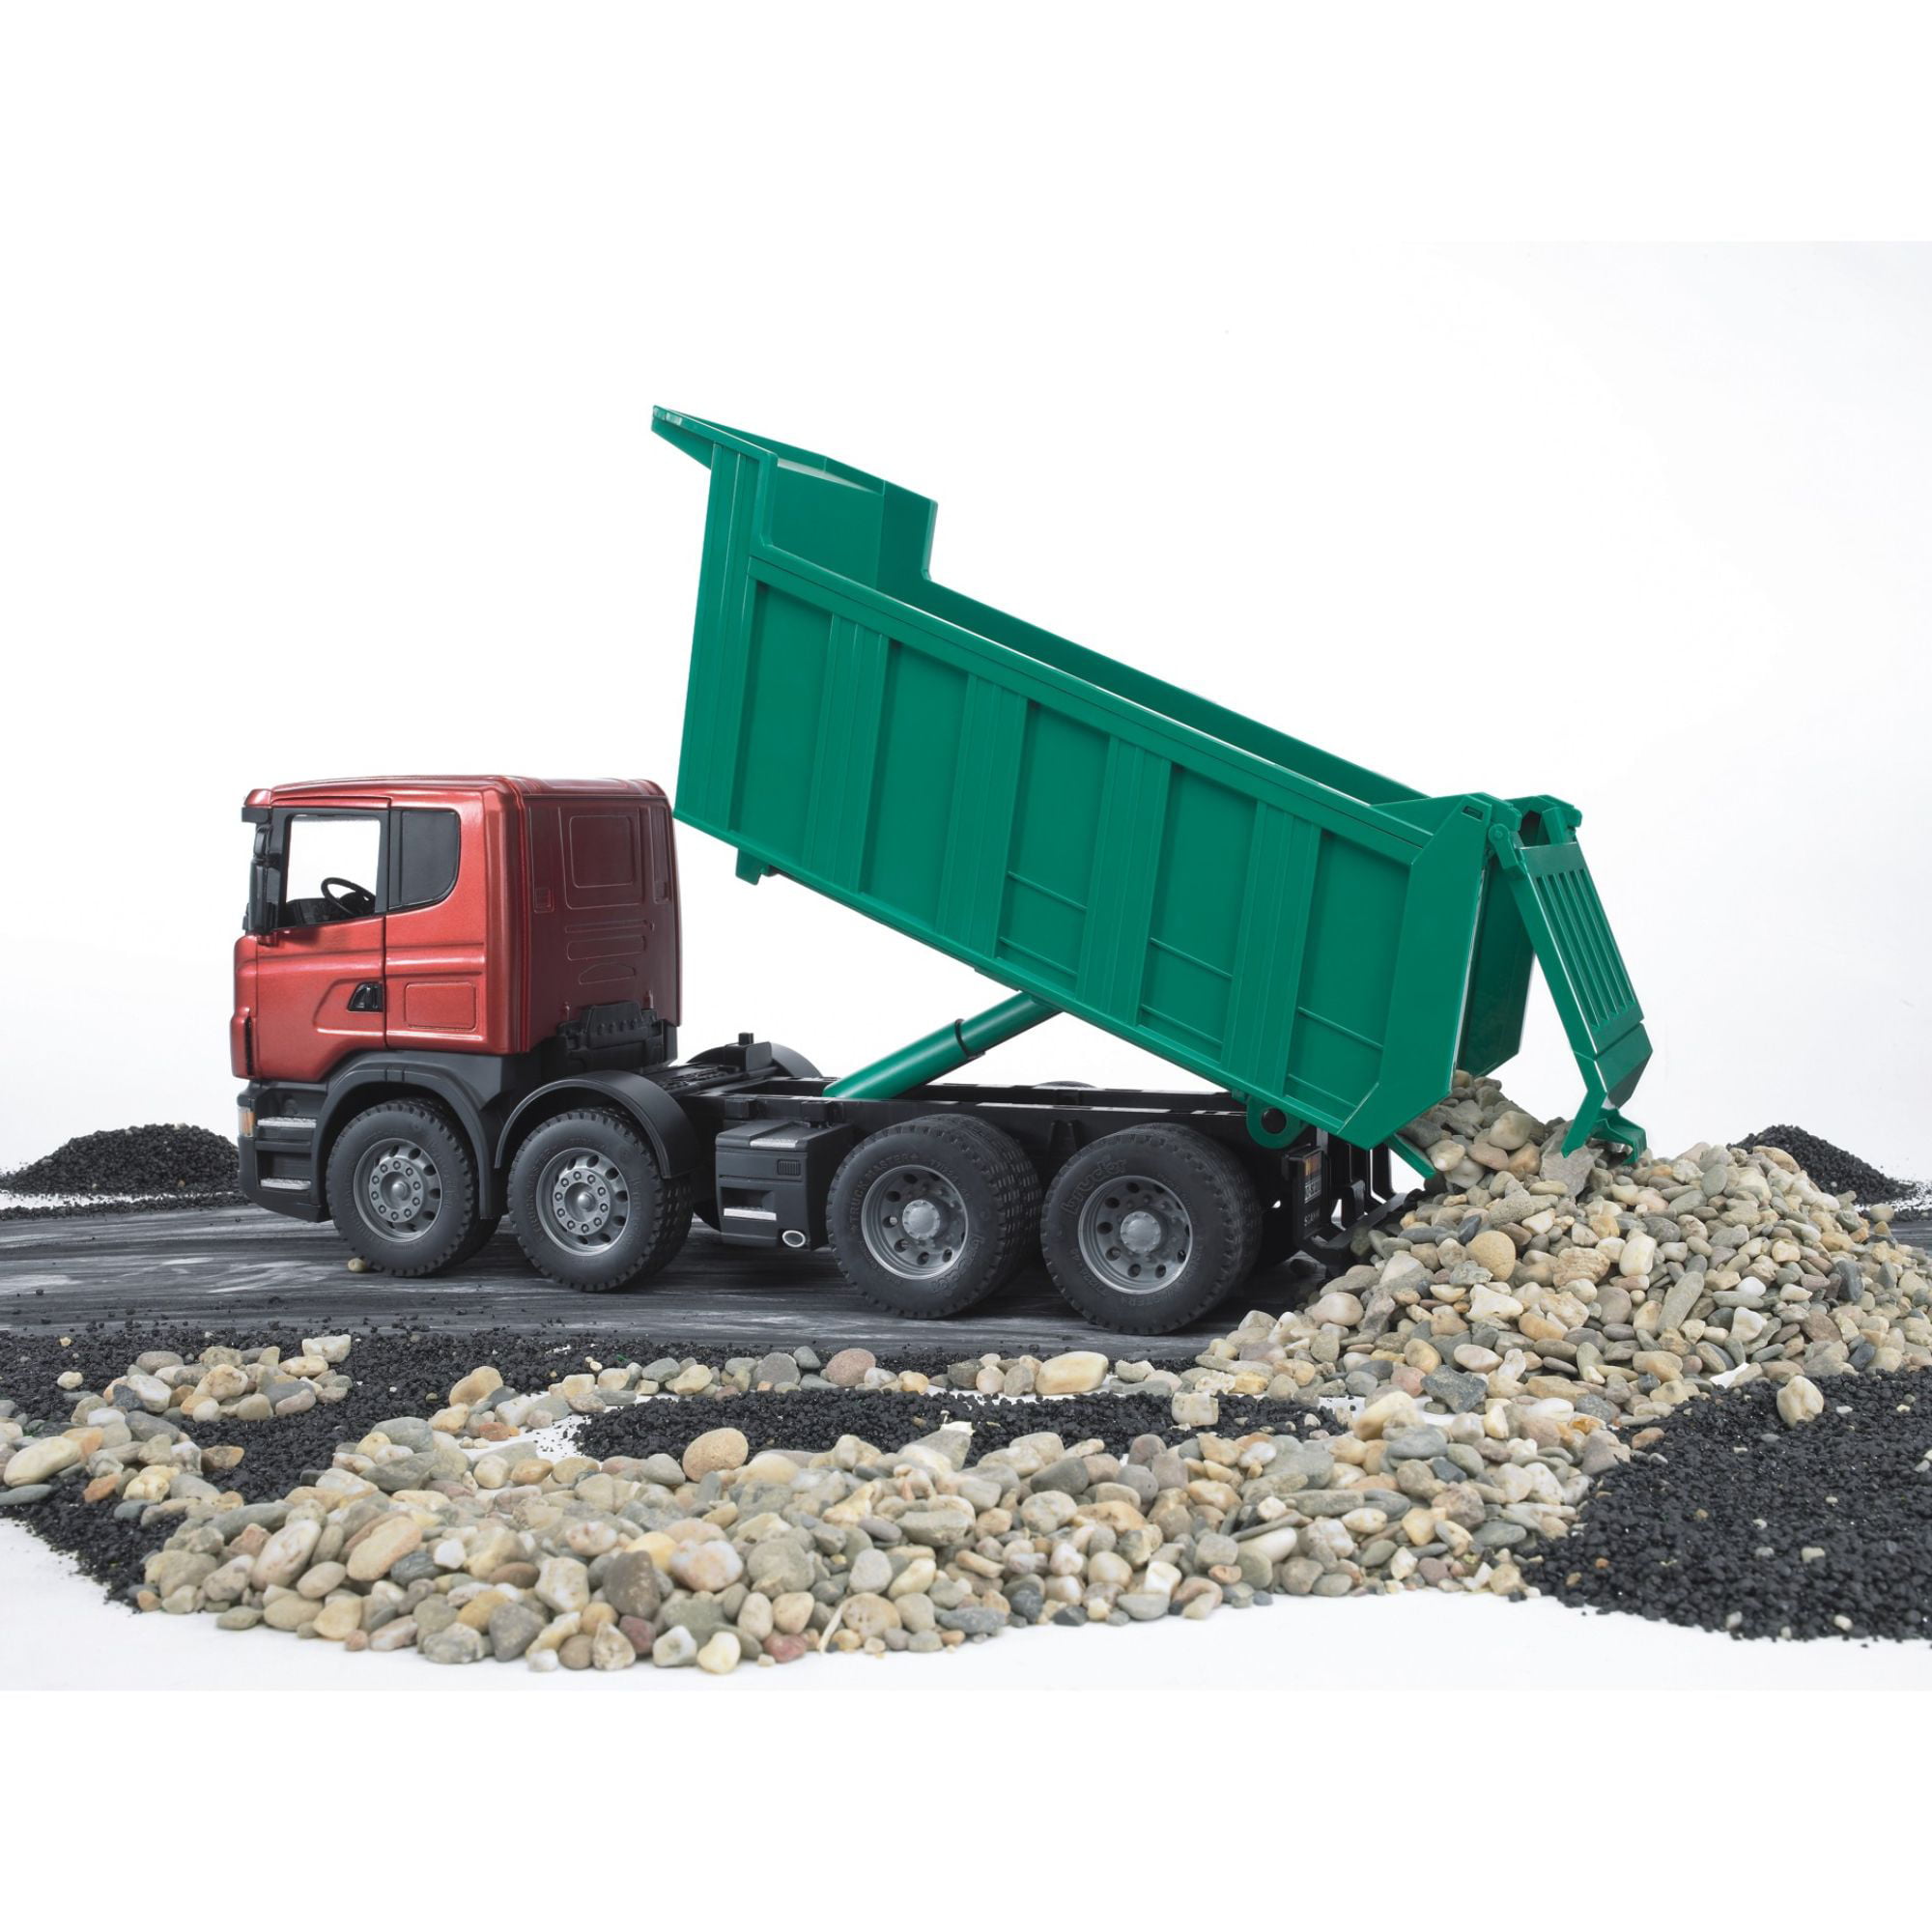 NEW Bruder Scania R-Series Dump Truck Construction Vehicle 03550 